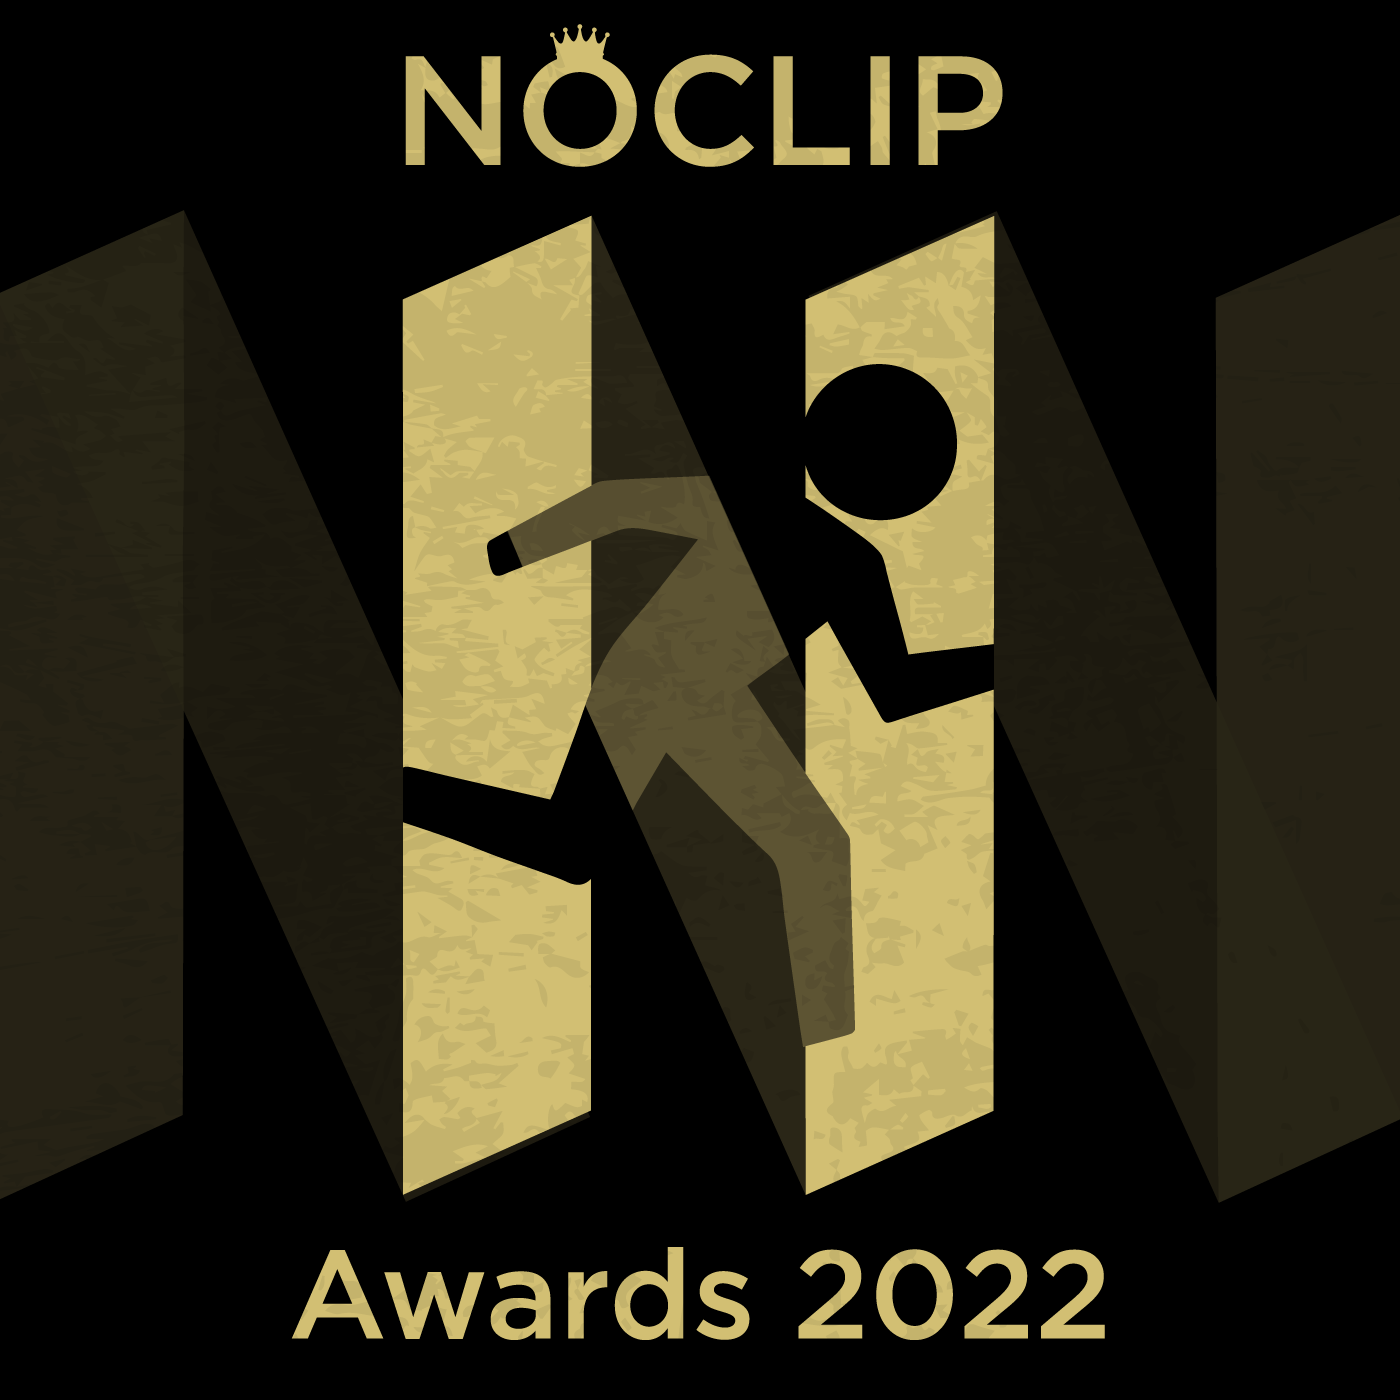 NOCLIP Pocket E76 - Attacked by a Chair - Vampire Survivors — NOCLIP